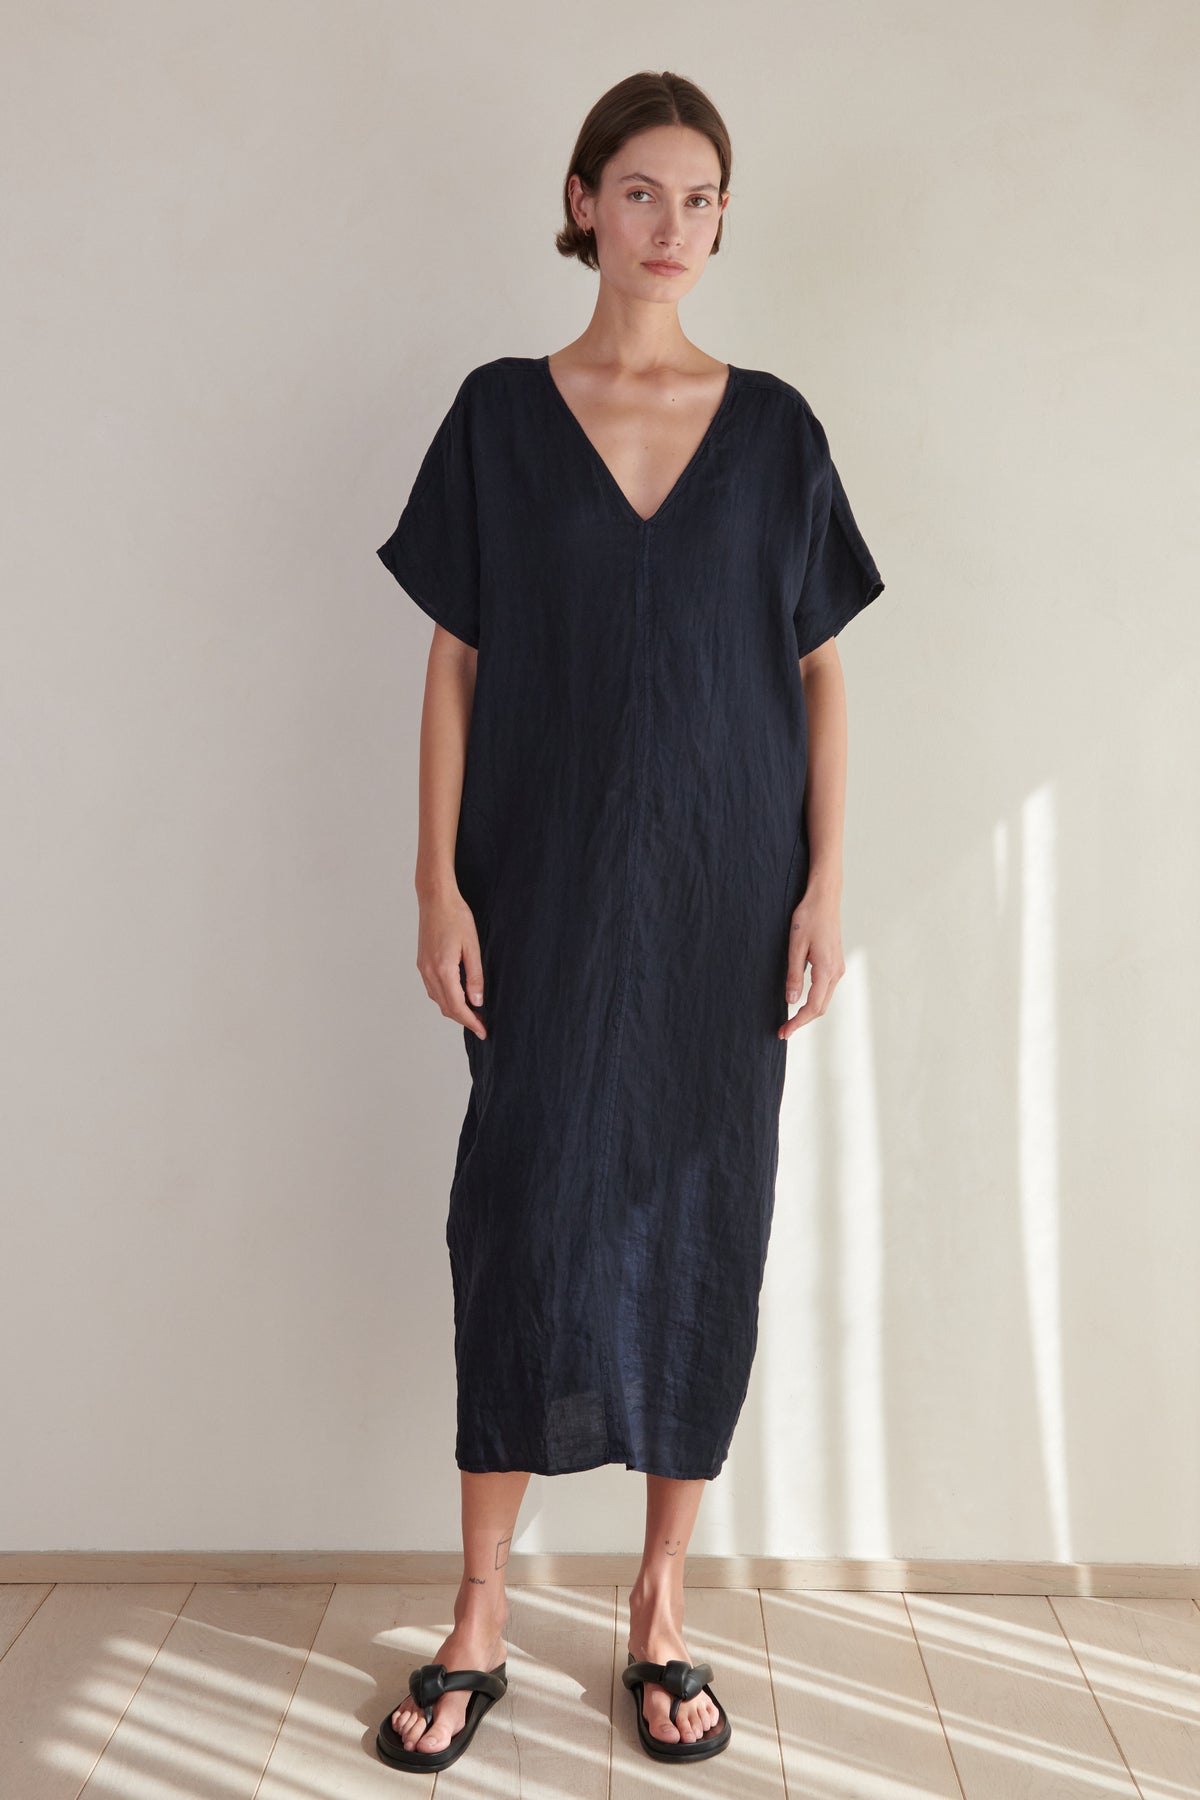 a model wearing a navy Velvet by Jenny Graham linen MONTANA DRESS and flip flops.-26293194621121